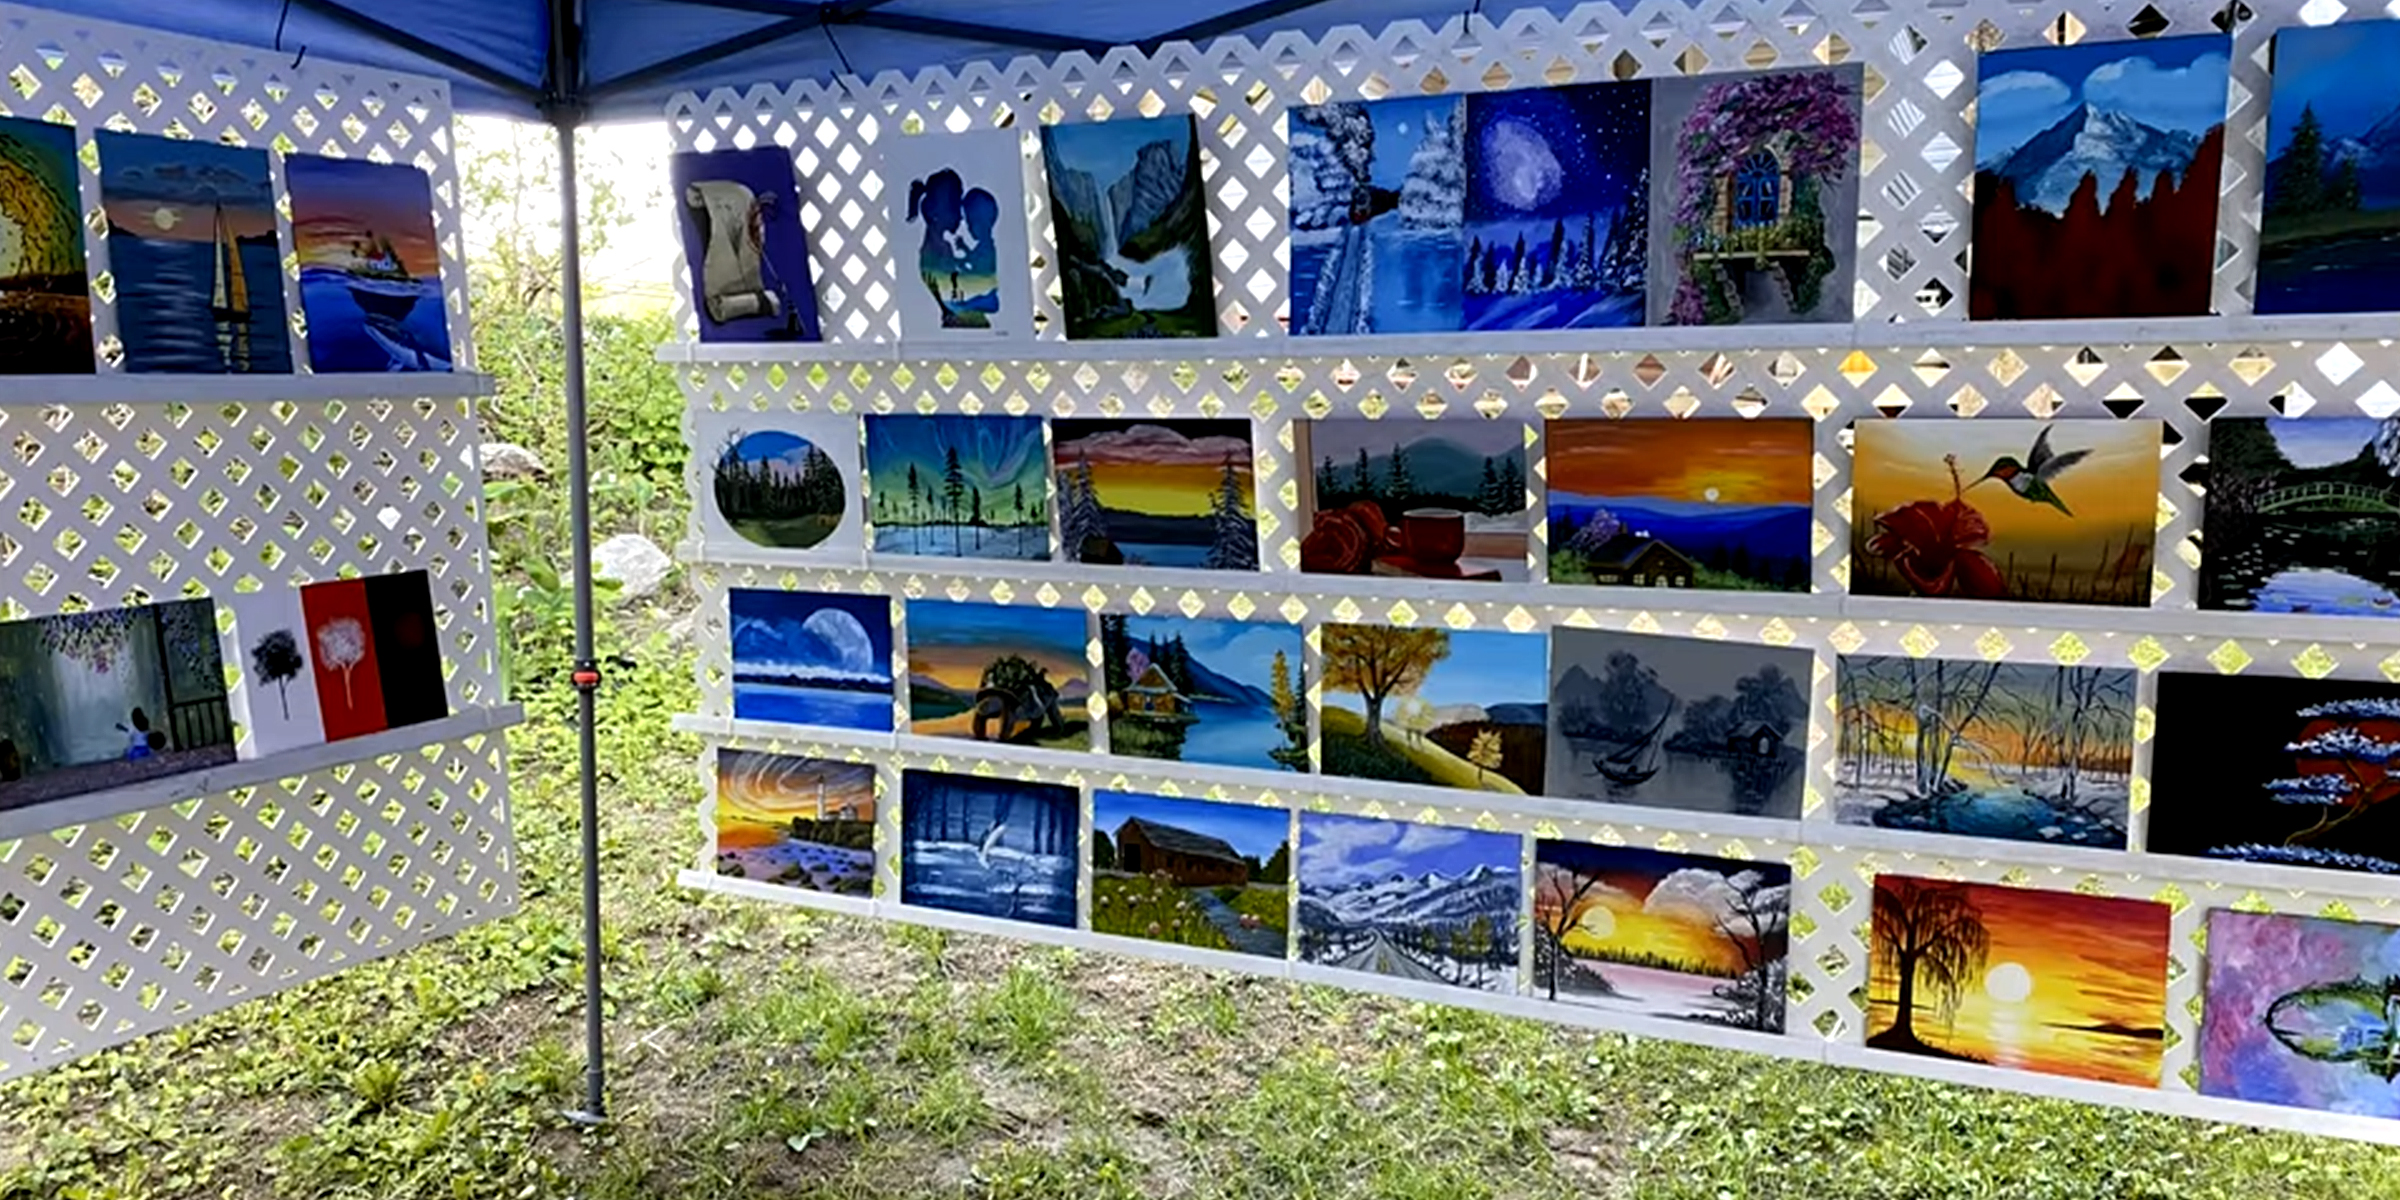 DIY art display panels | Source: YouTube.com/@PatMoore1946